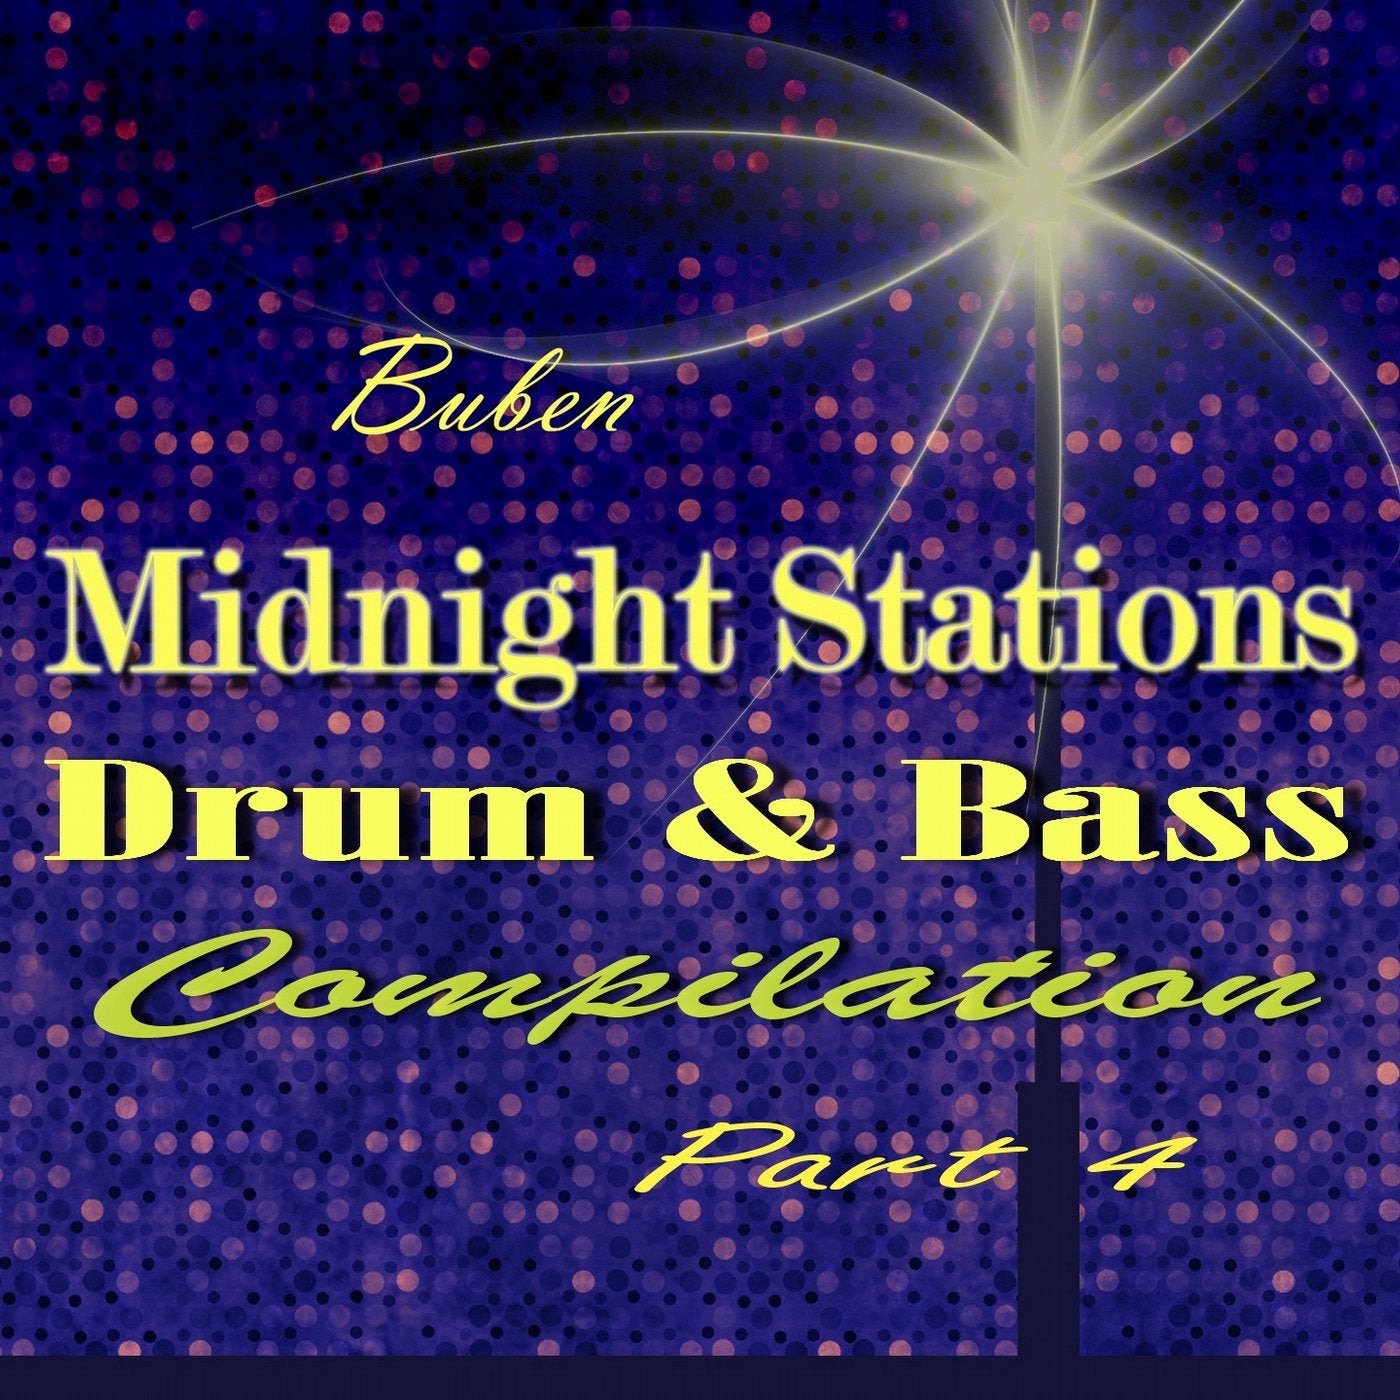 Drum & Bass Compilation "Midnight Stations", Pt. 4